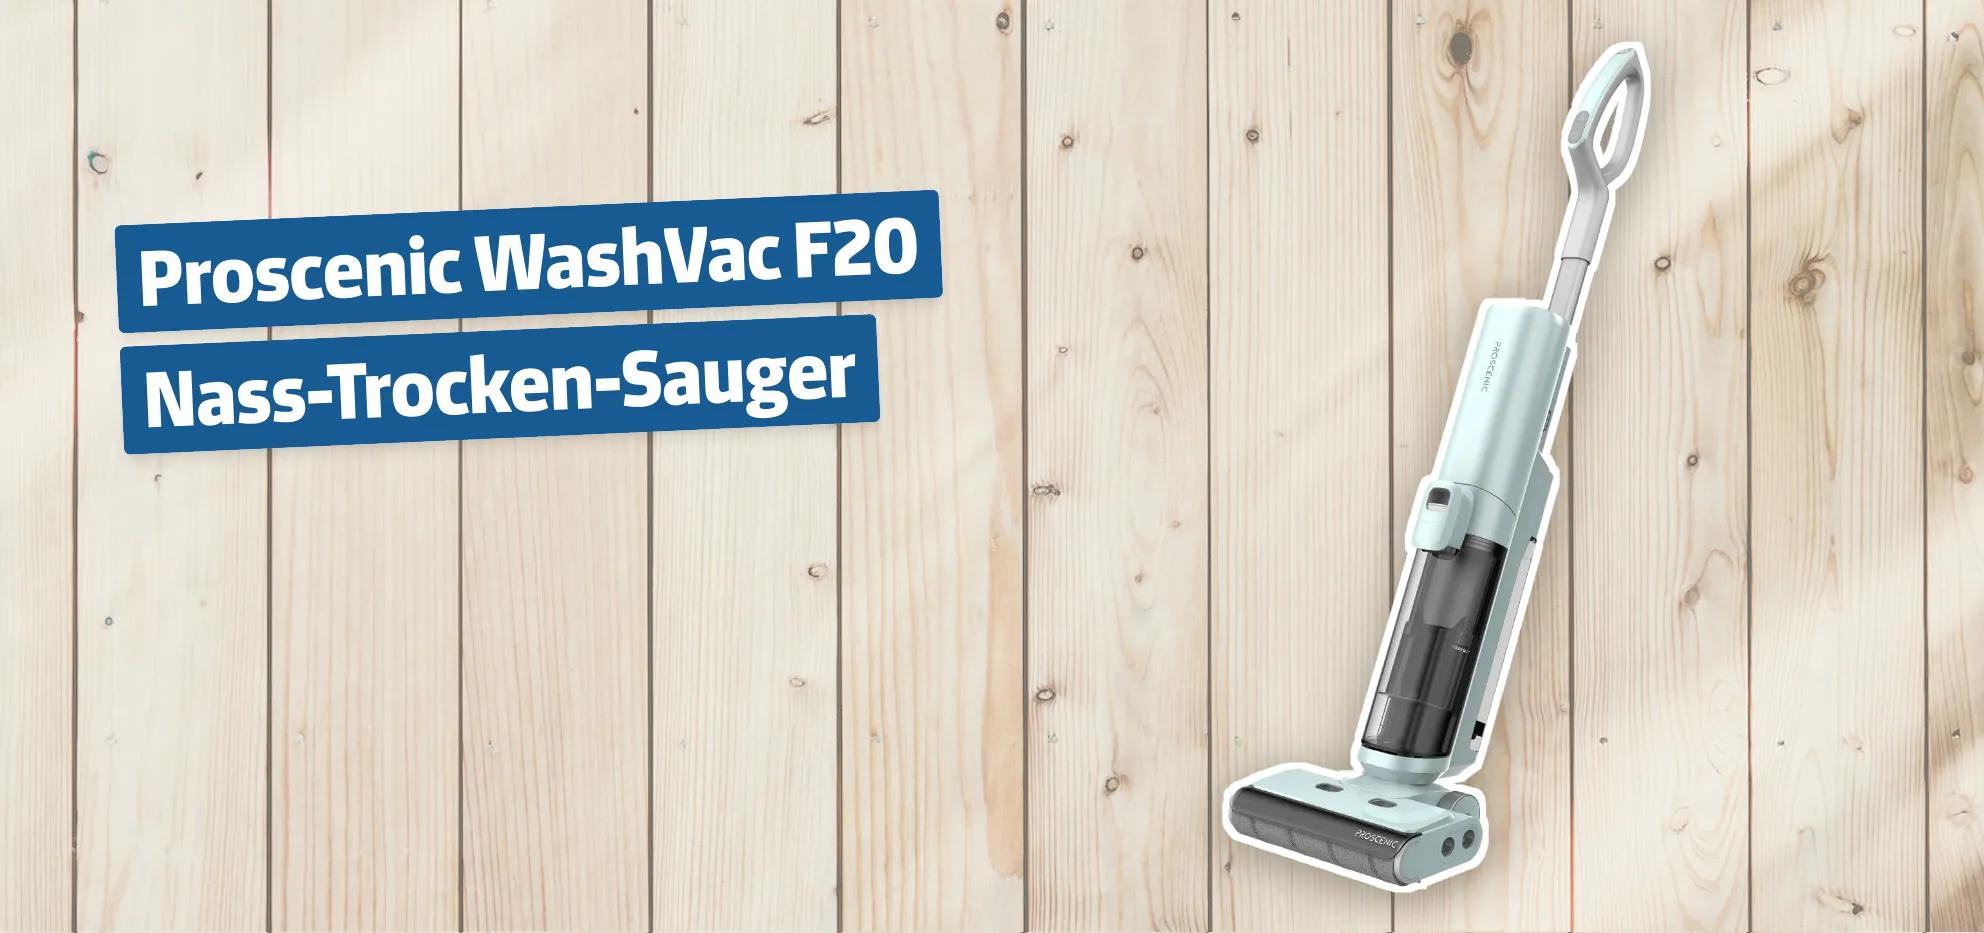 Proscenic WashVac F20 Nass-Trocken-Sauger